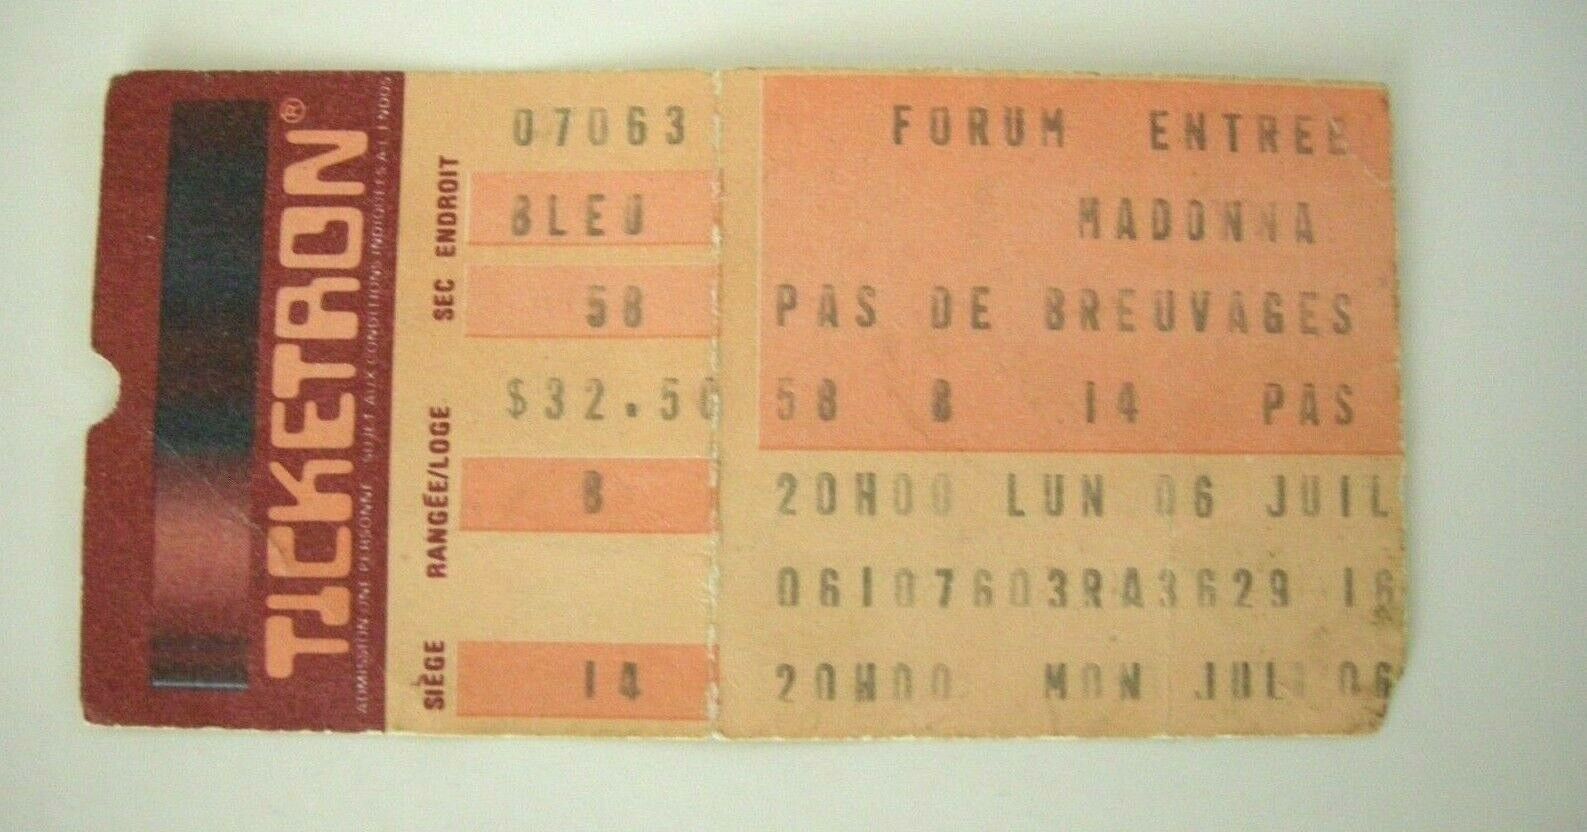 Madonna Concert Ticket Stub July 6, 1987 Montreal Forum